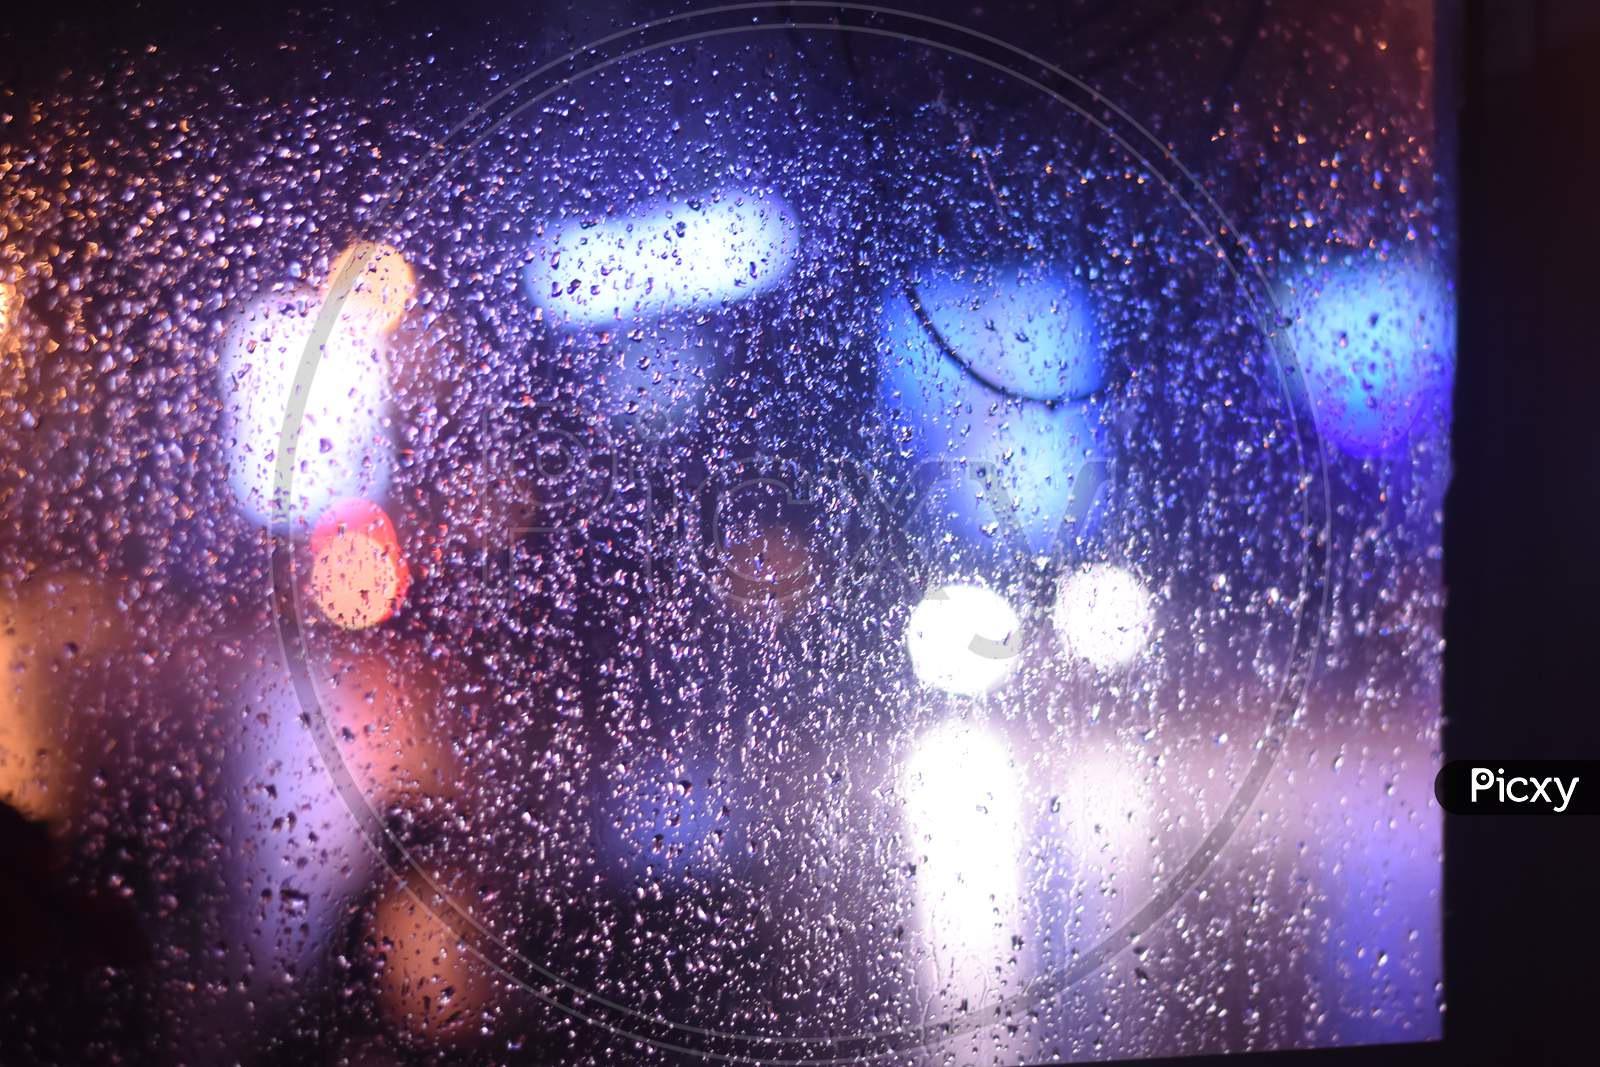 Rain water Droplets On a Glass Shield